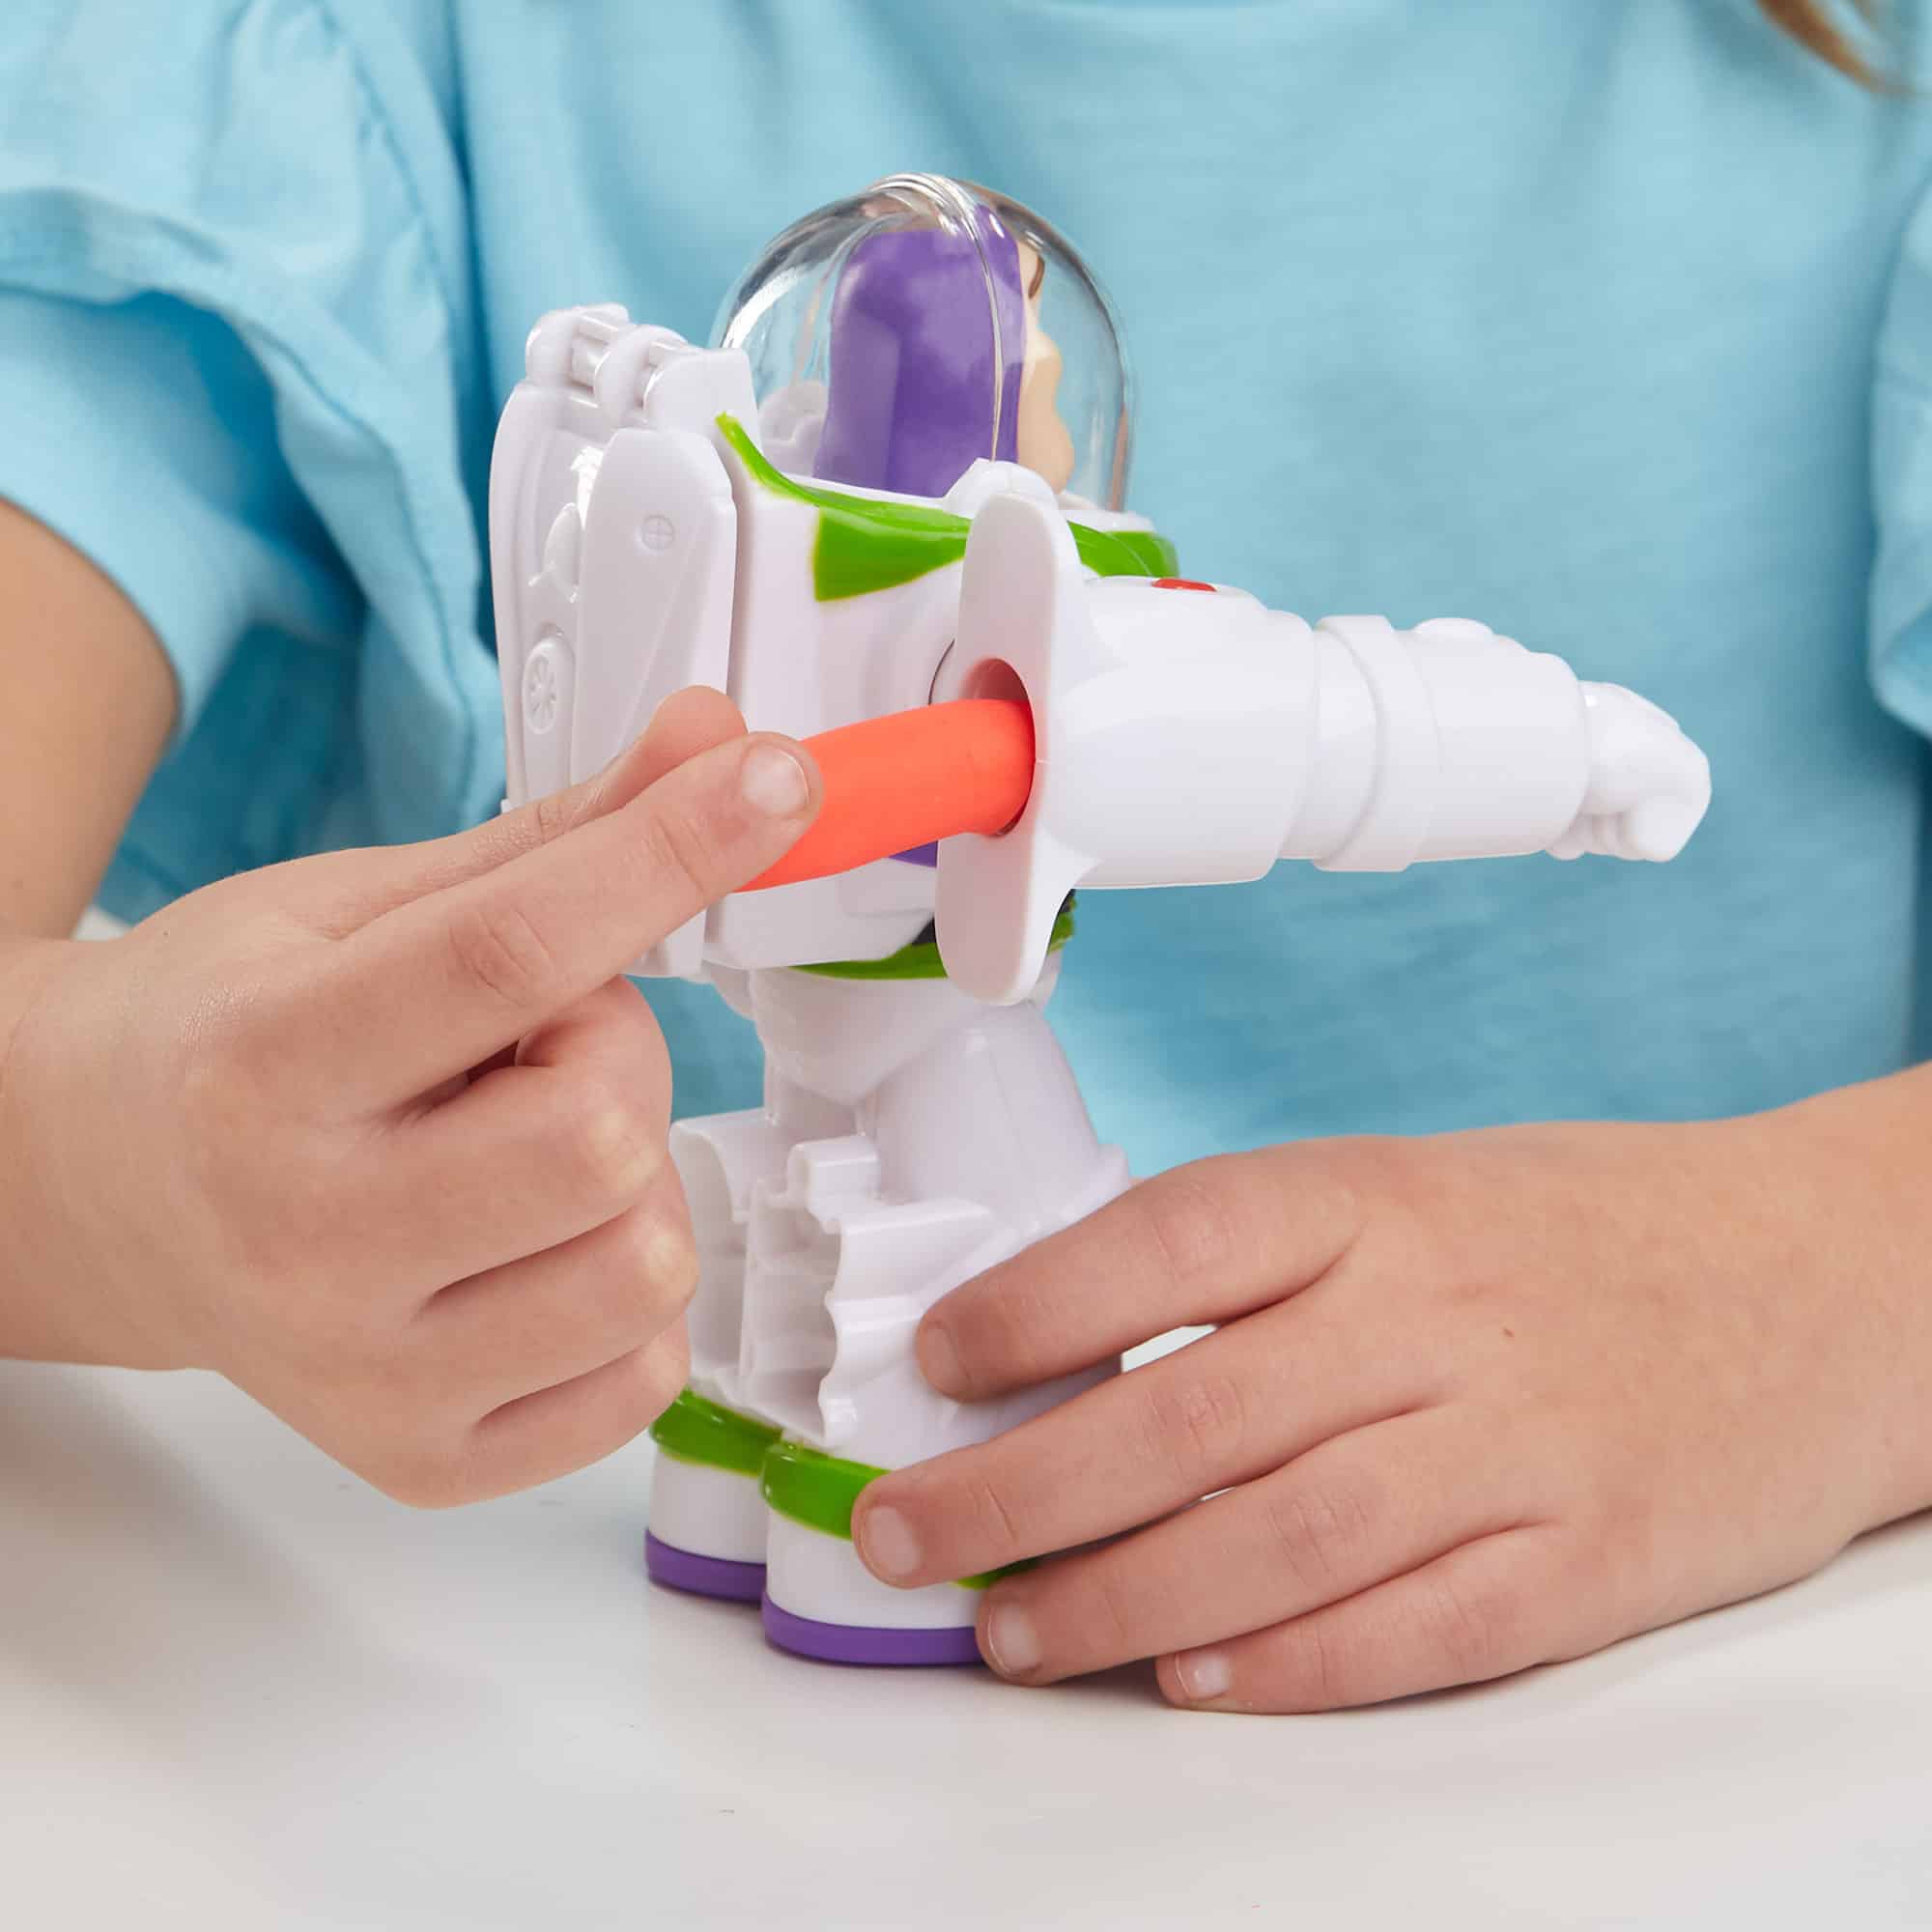 Play-Doh - Toy Story Buzz Lightyear Set